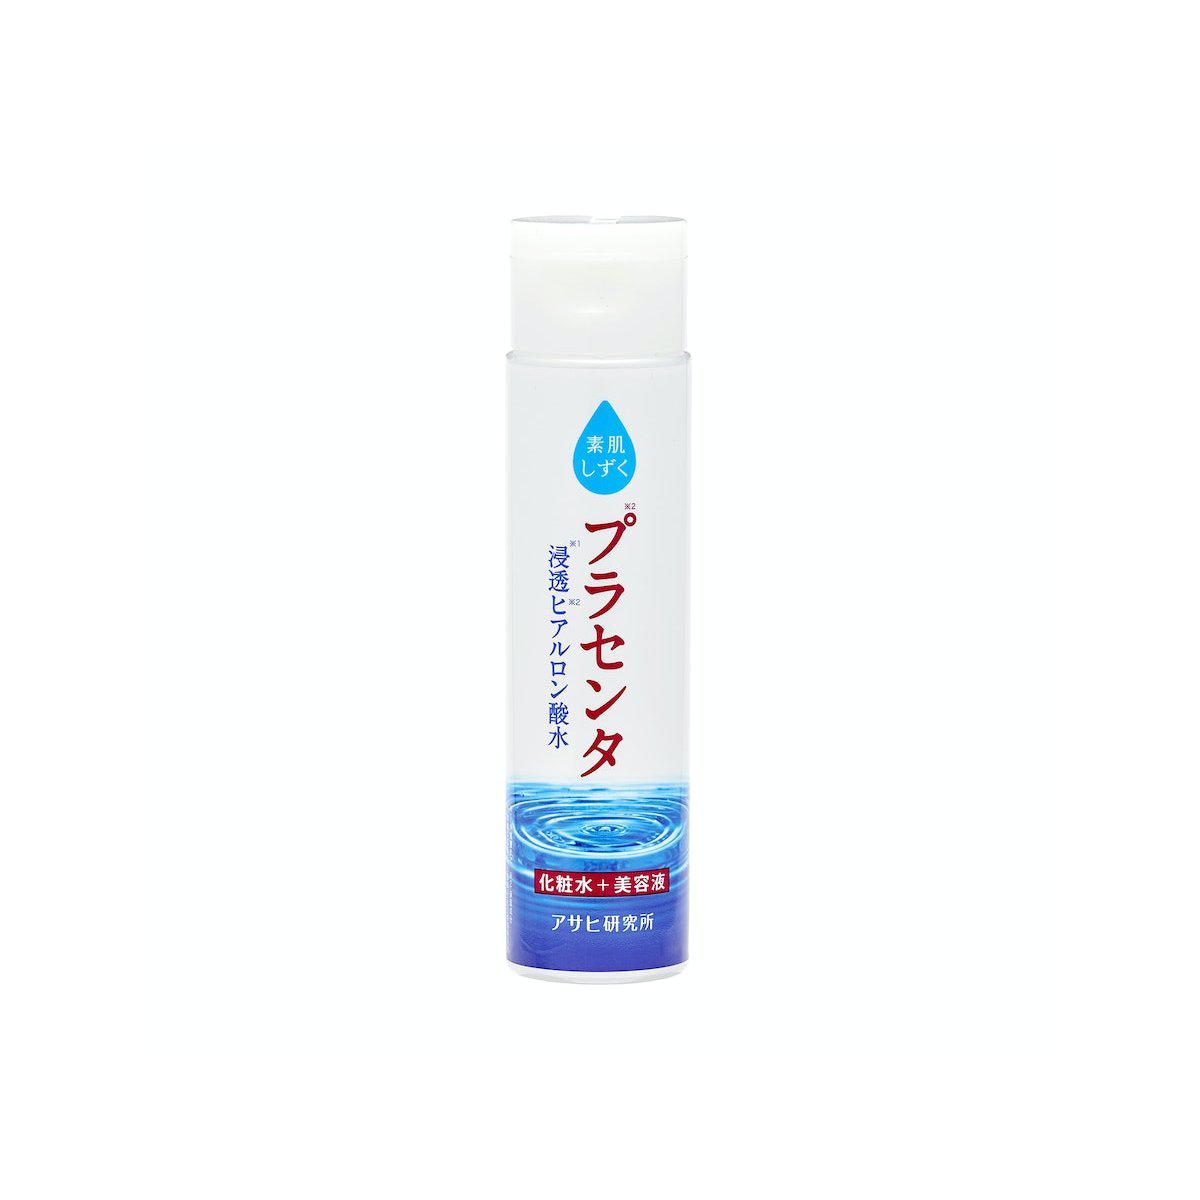 Asahi-Suhada-Shizuku-Placenta-Lotion-for-Dewy-Skin-200ml-1-2023-10-27T08:09:59.322Z.jpg